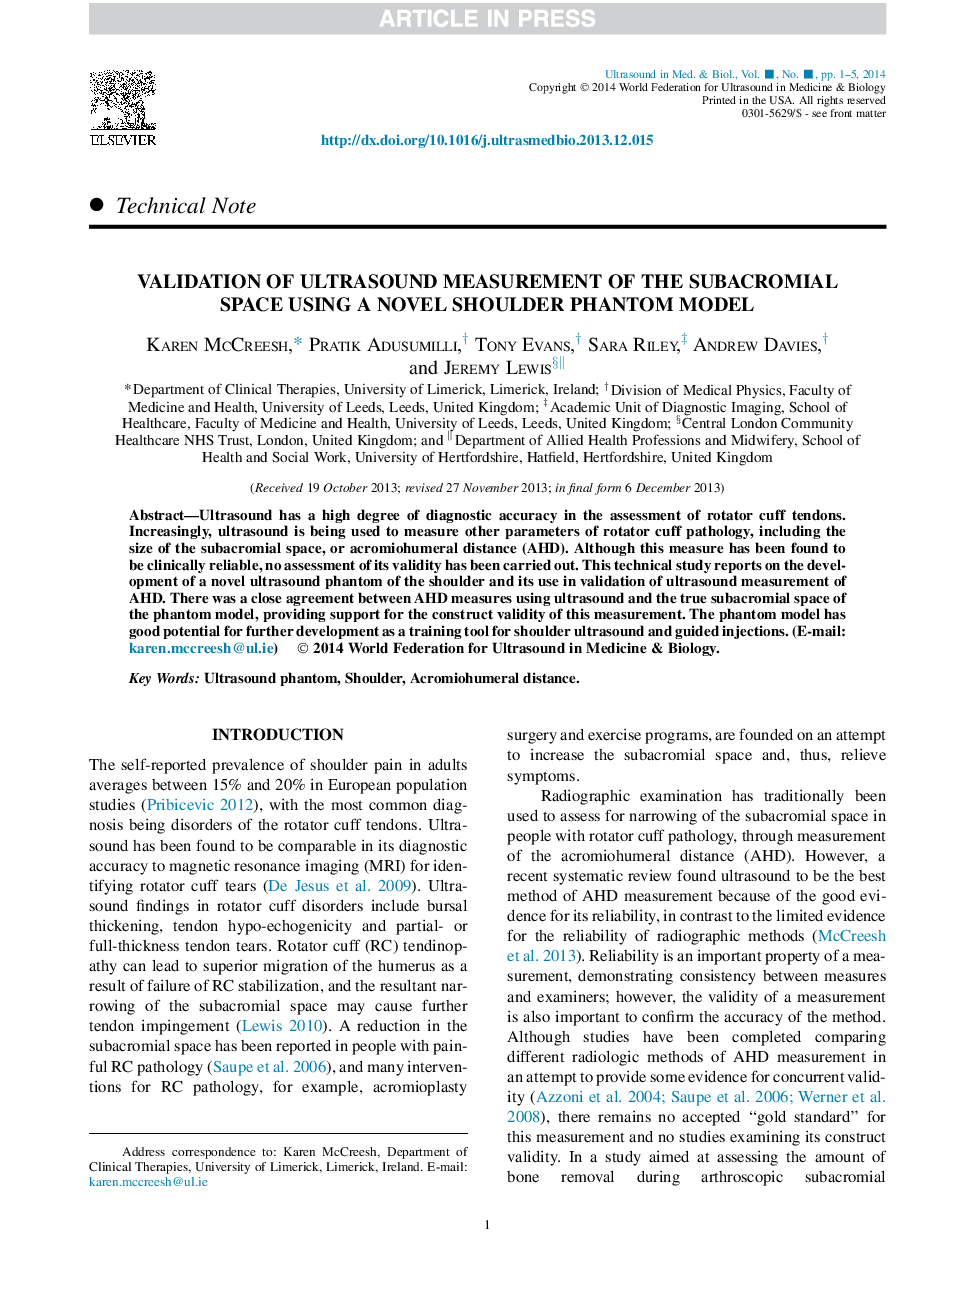 Validation of Ultrasound Measurement of the Subacromial Space Using a Novel Shoulder Phantom Model